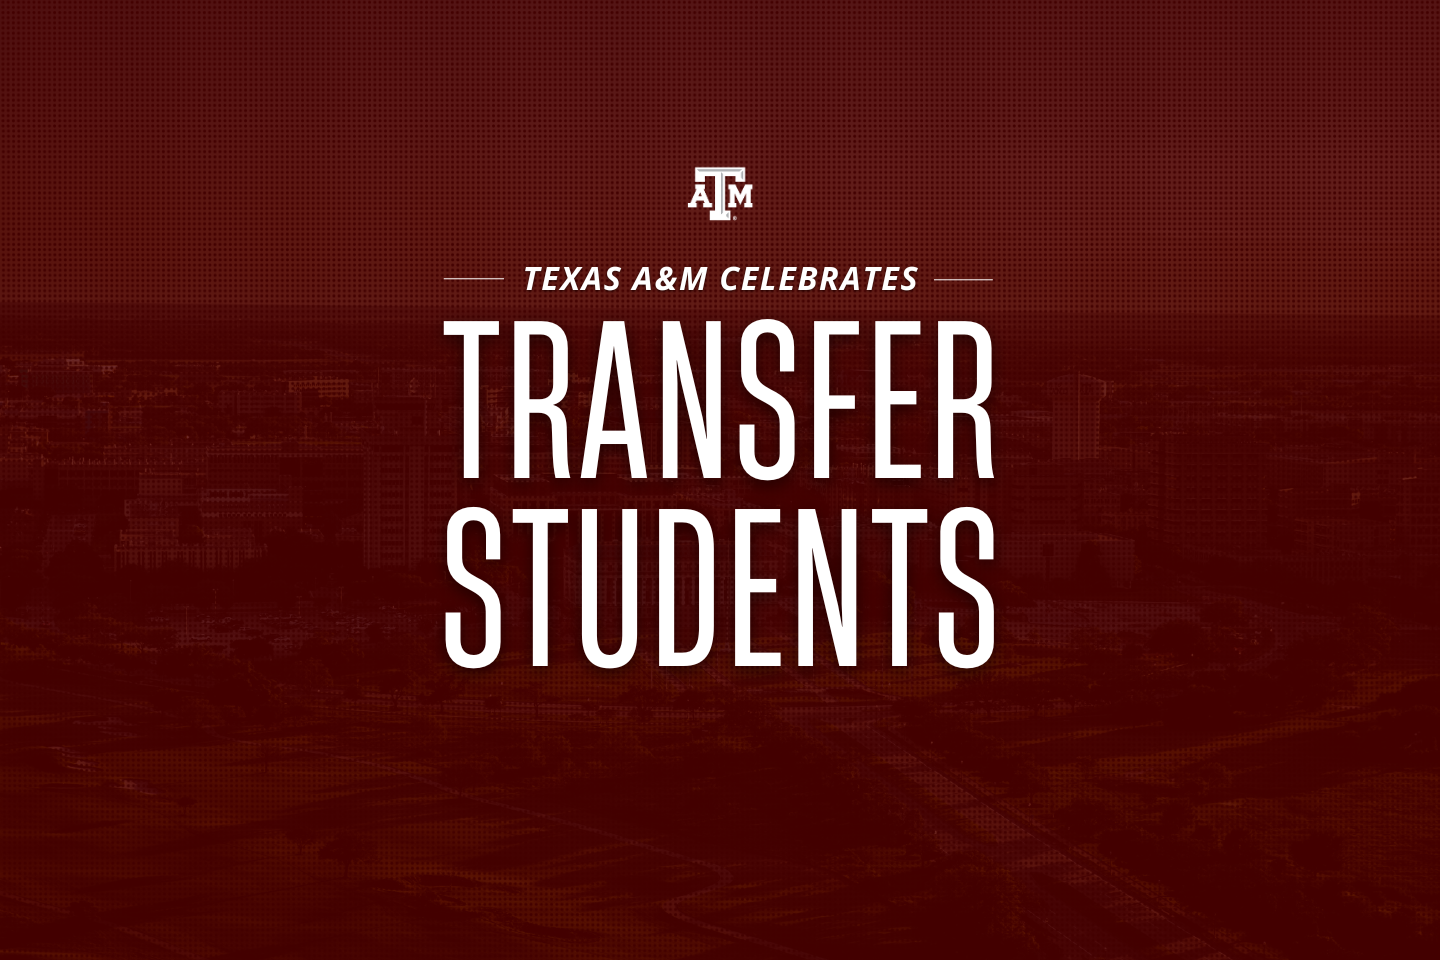 Texas A&M Celebrates Transfer Students